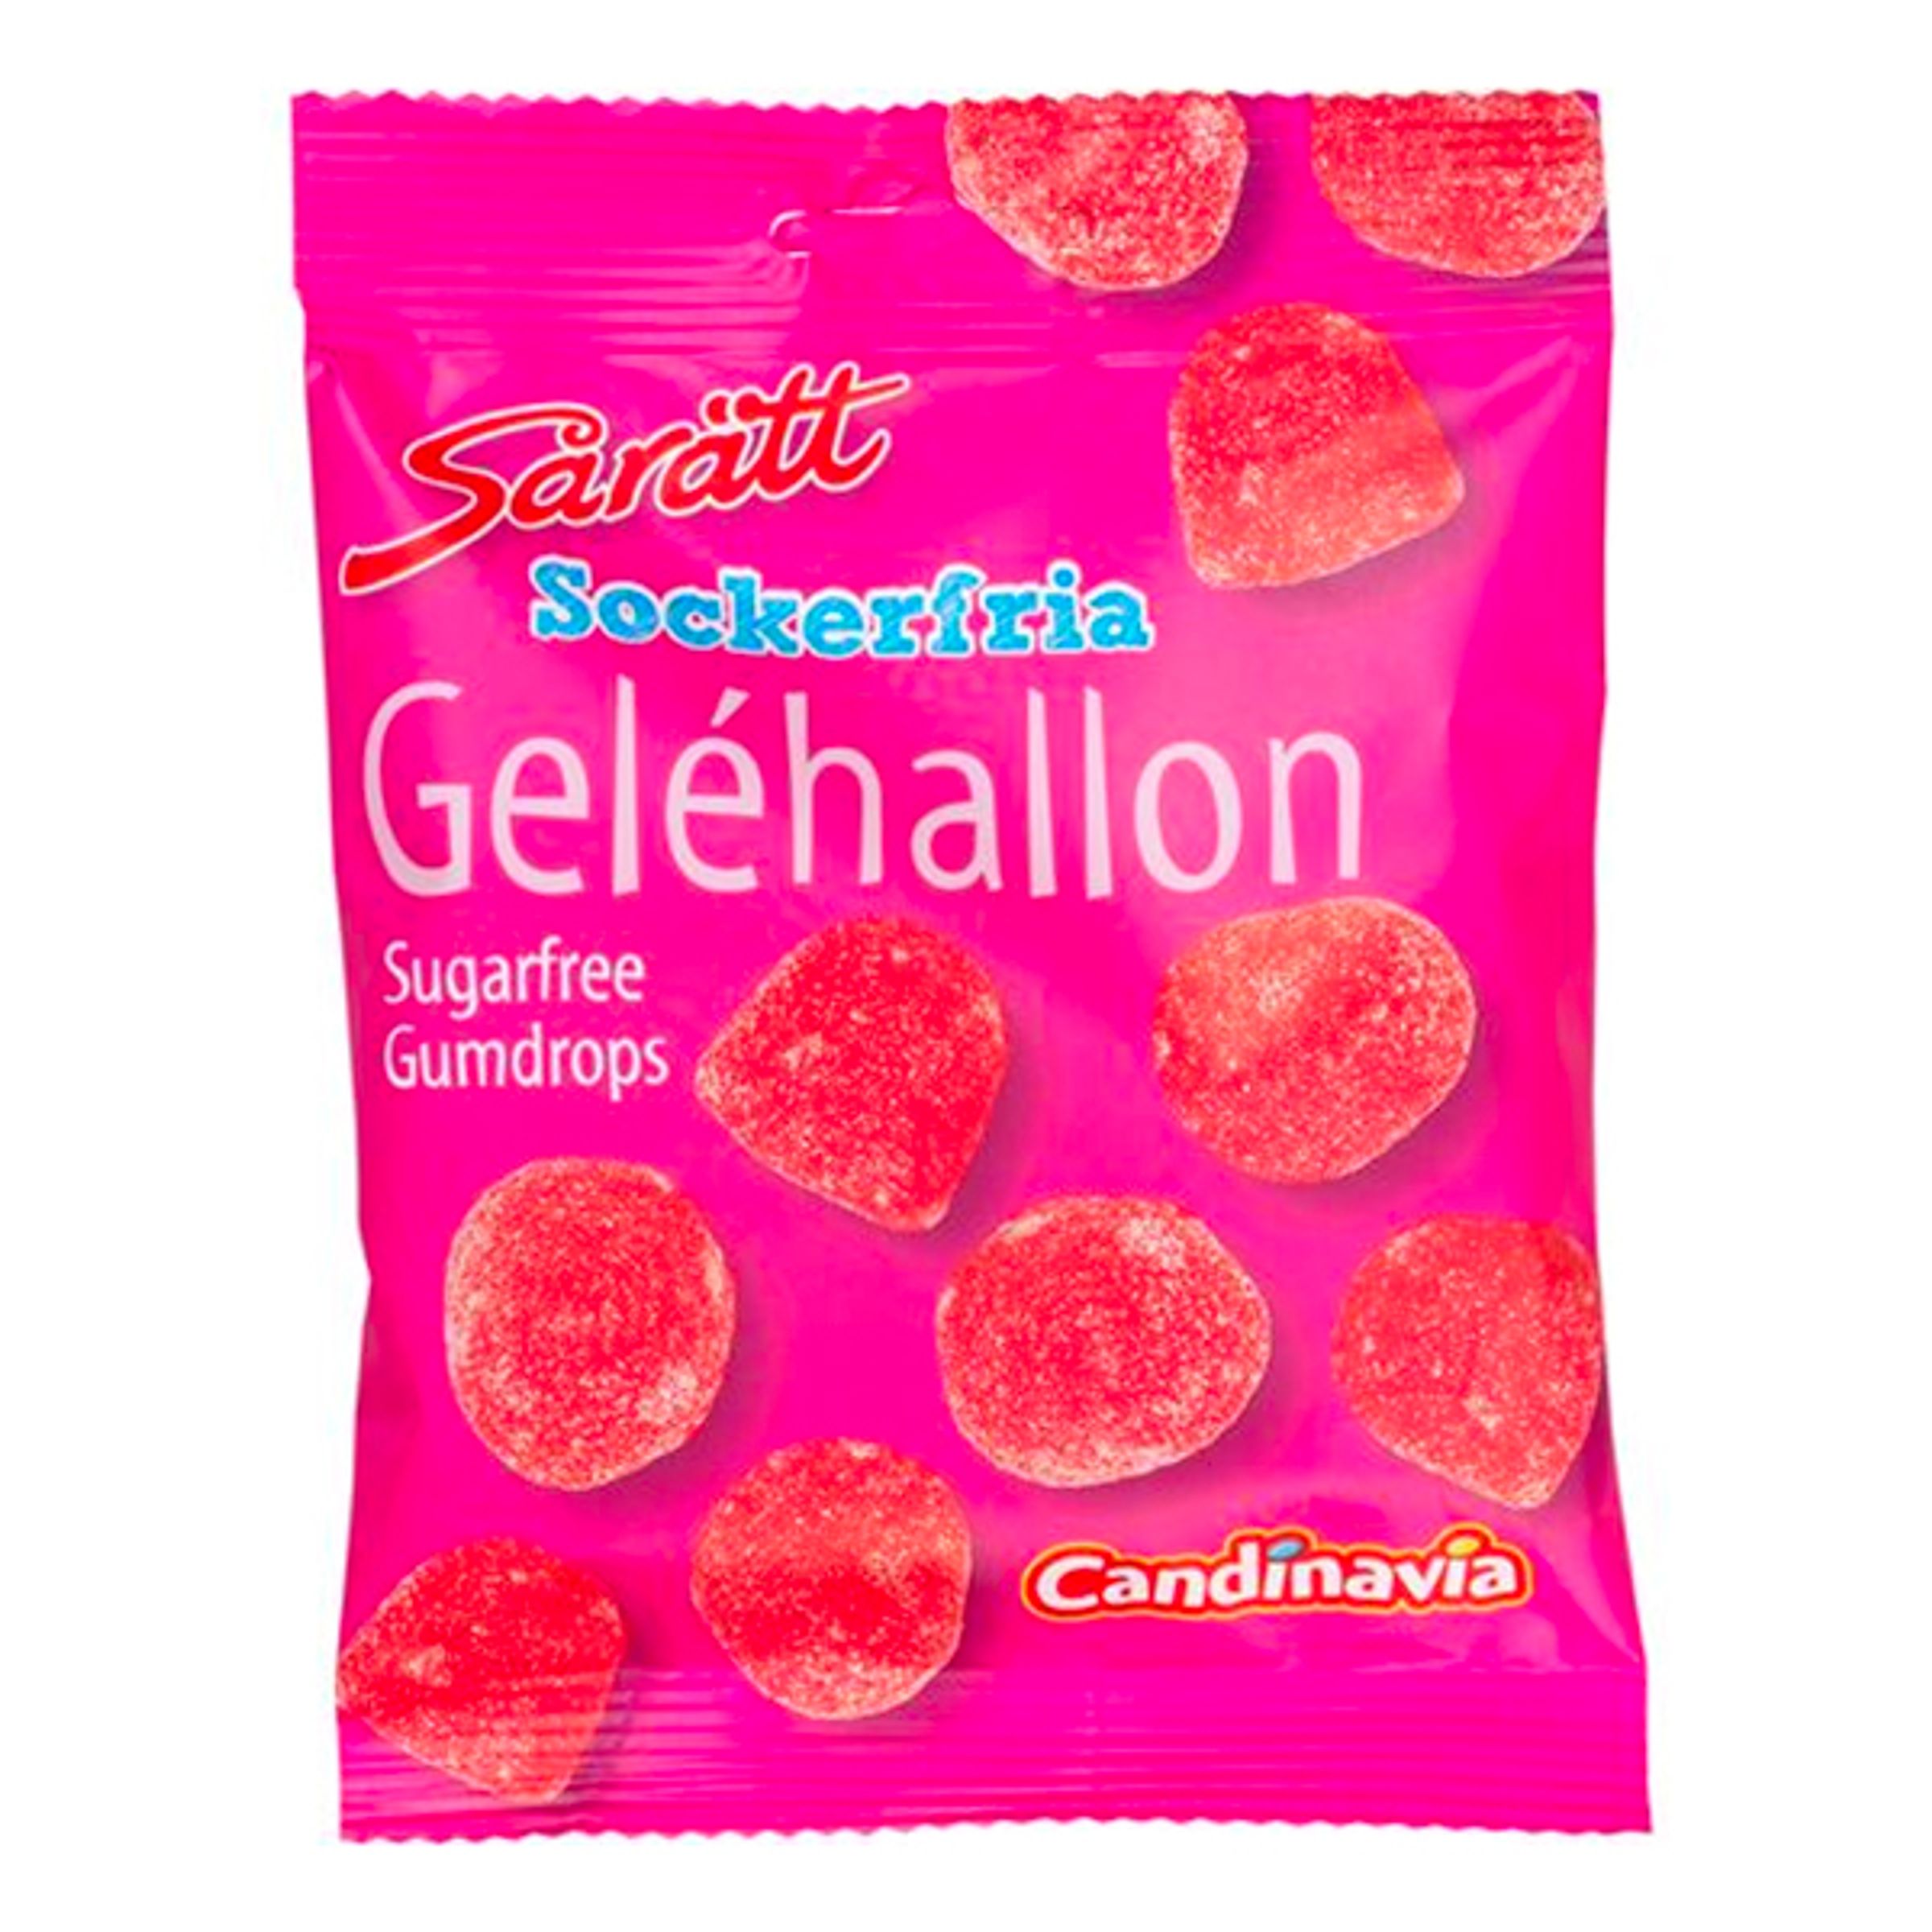 Sårätt Sockerfria Geléhallon - 80 gram